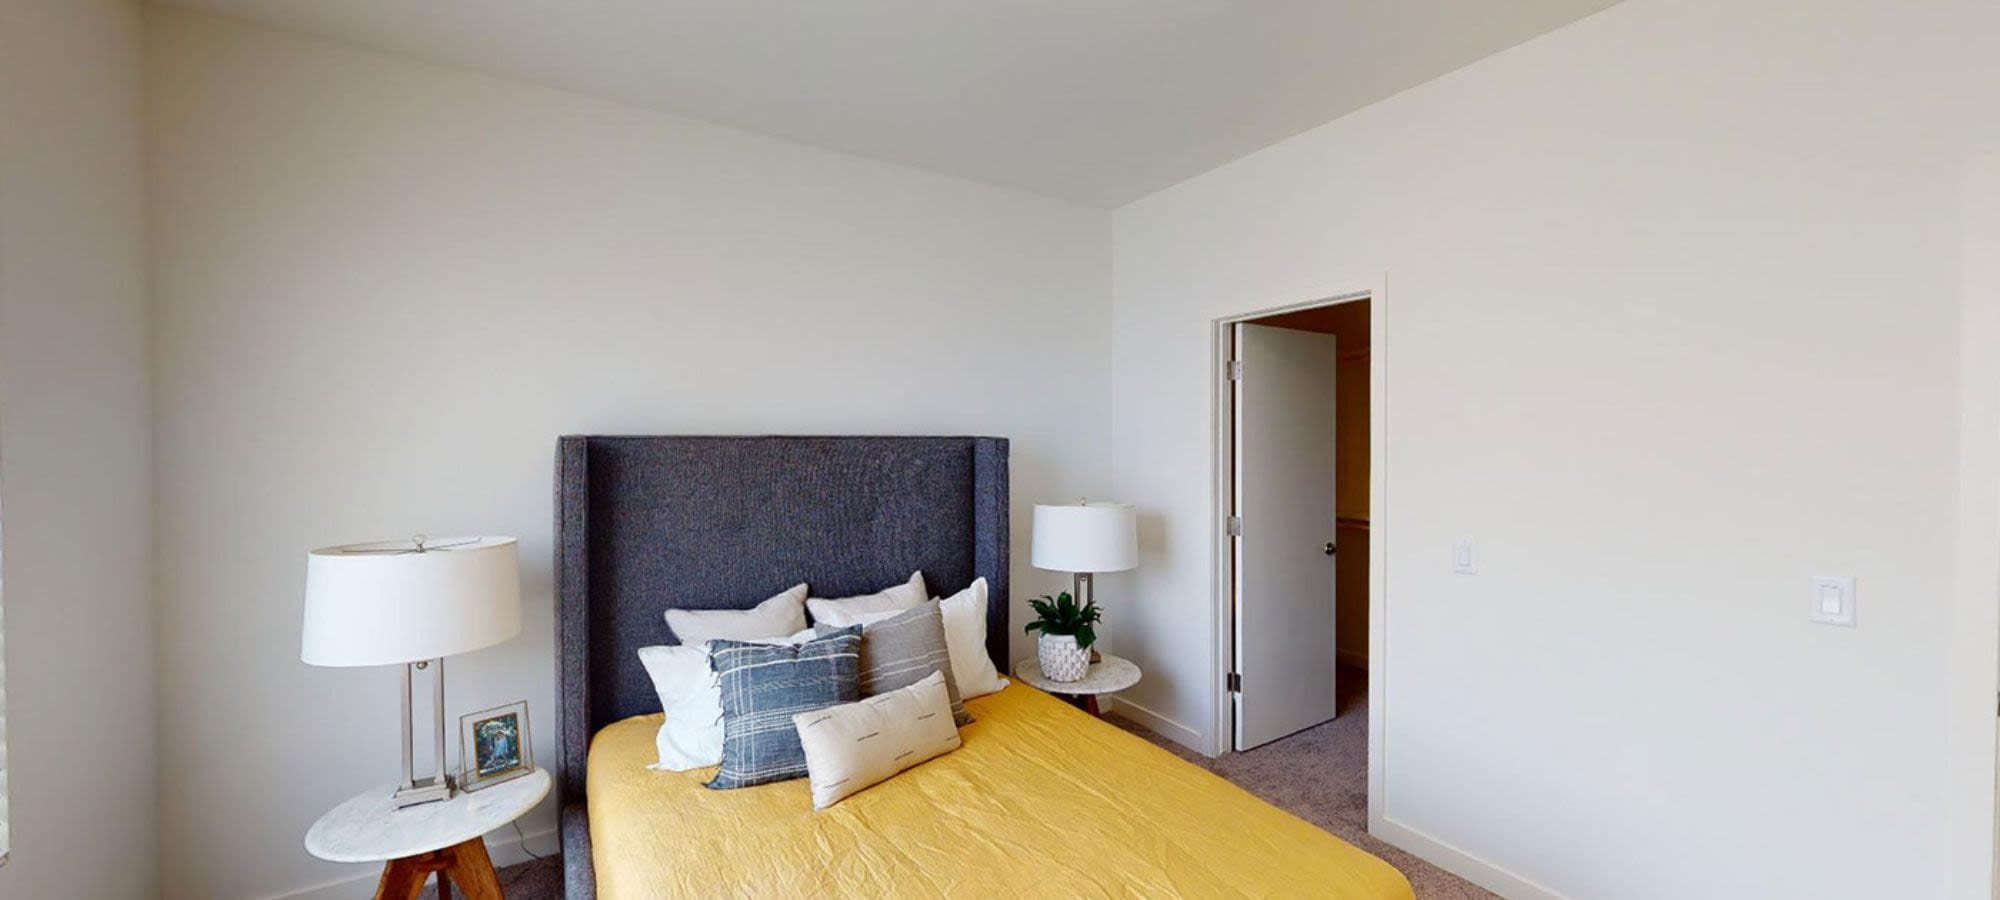 Model bedroom with yellow bed at Novella at Biltmore in Phoenix, Arizona